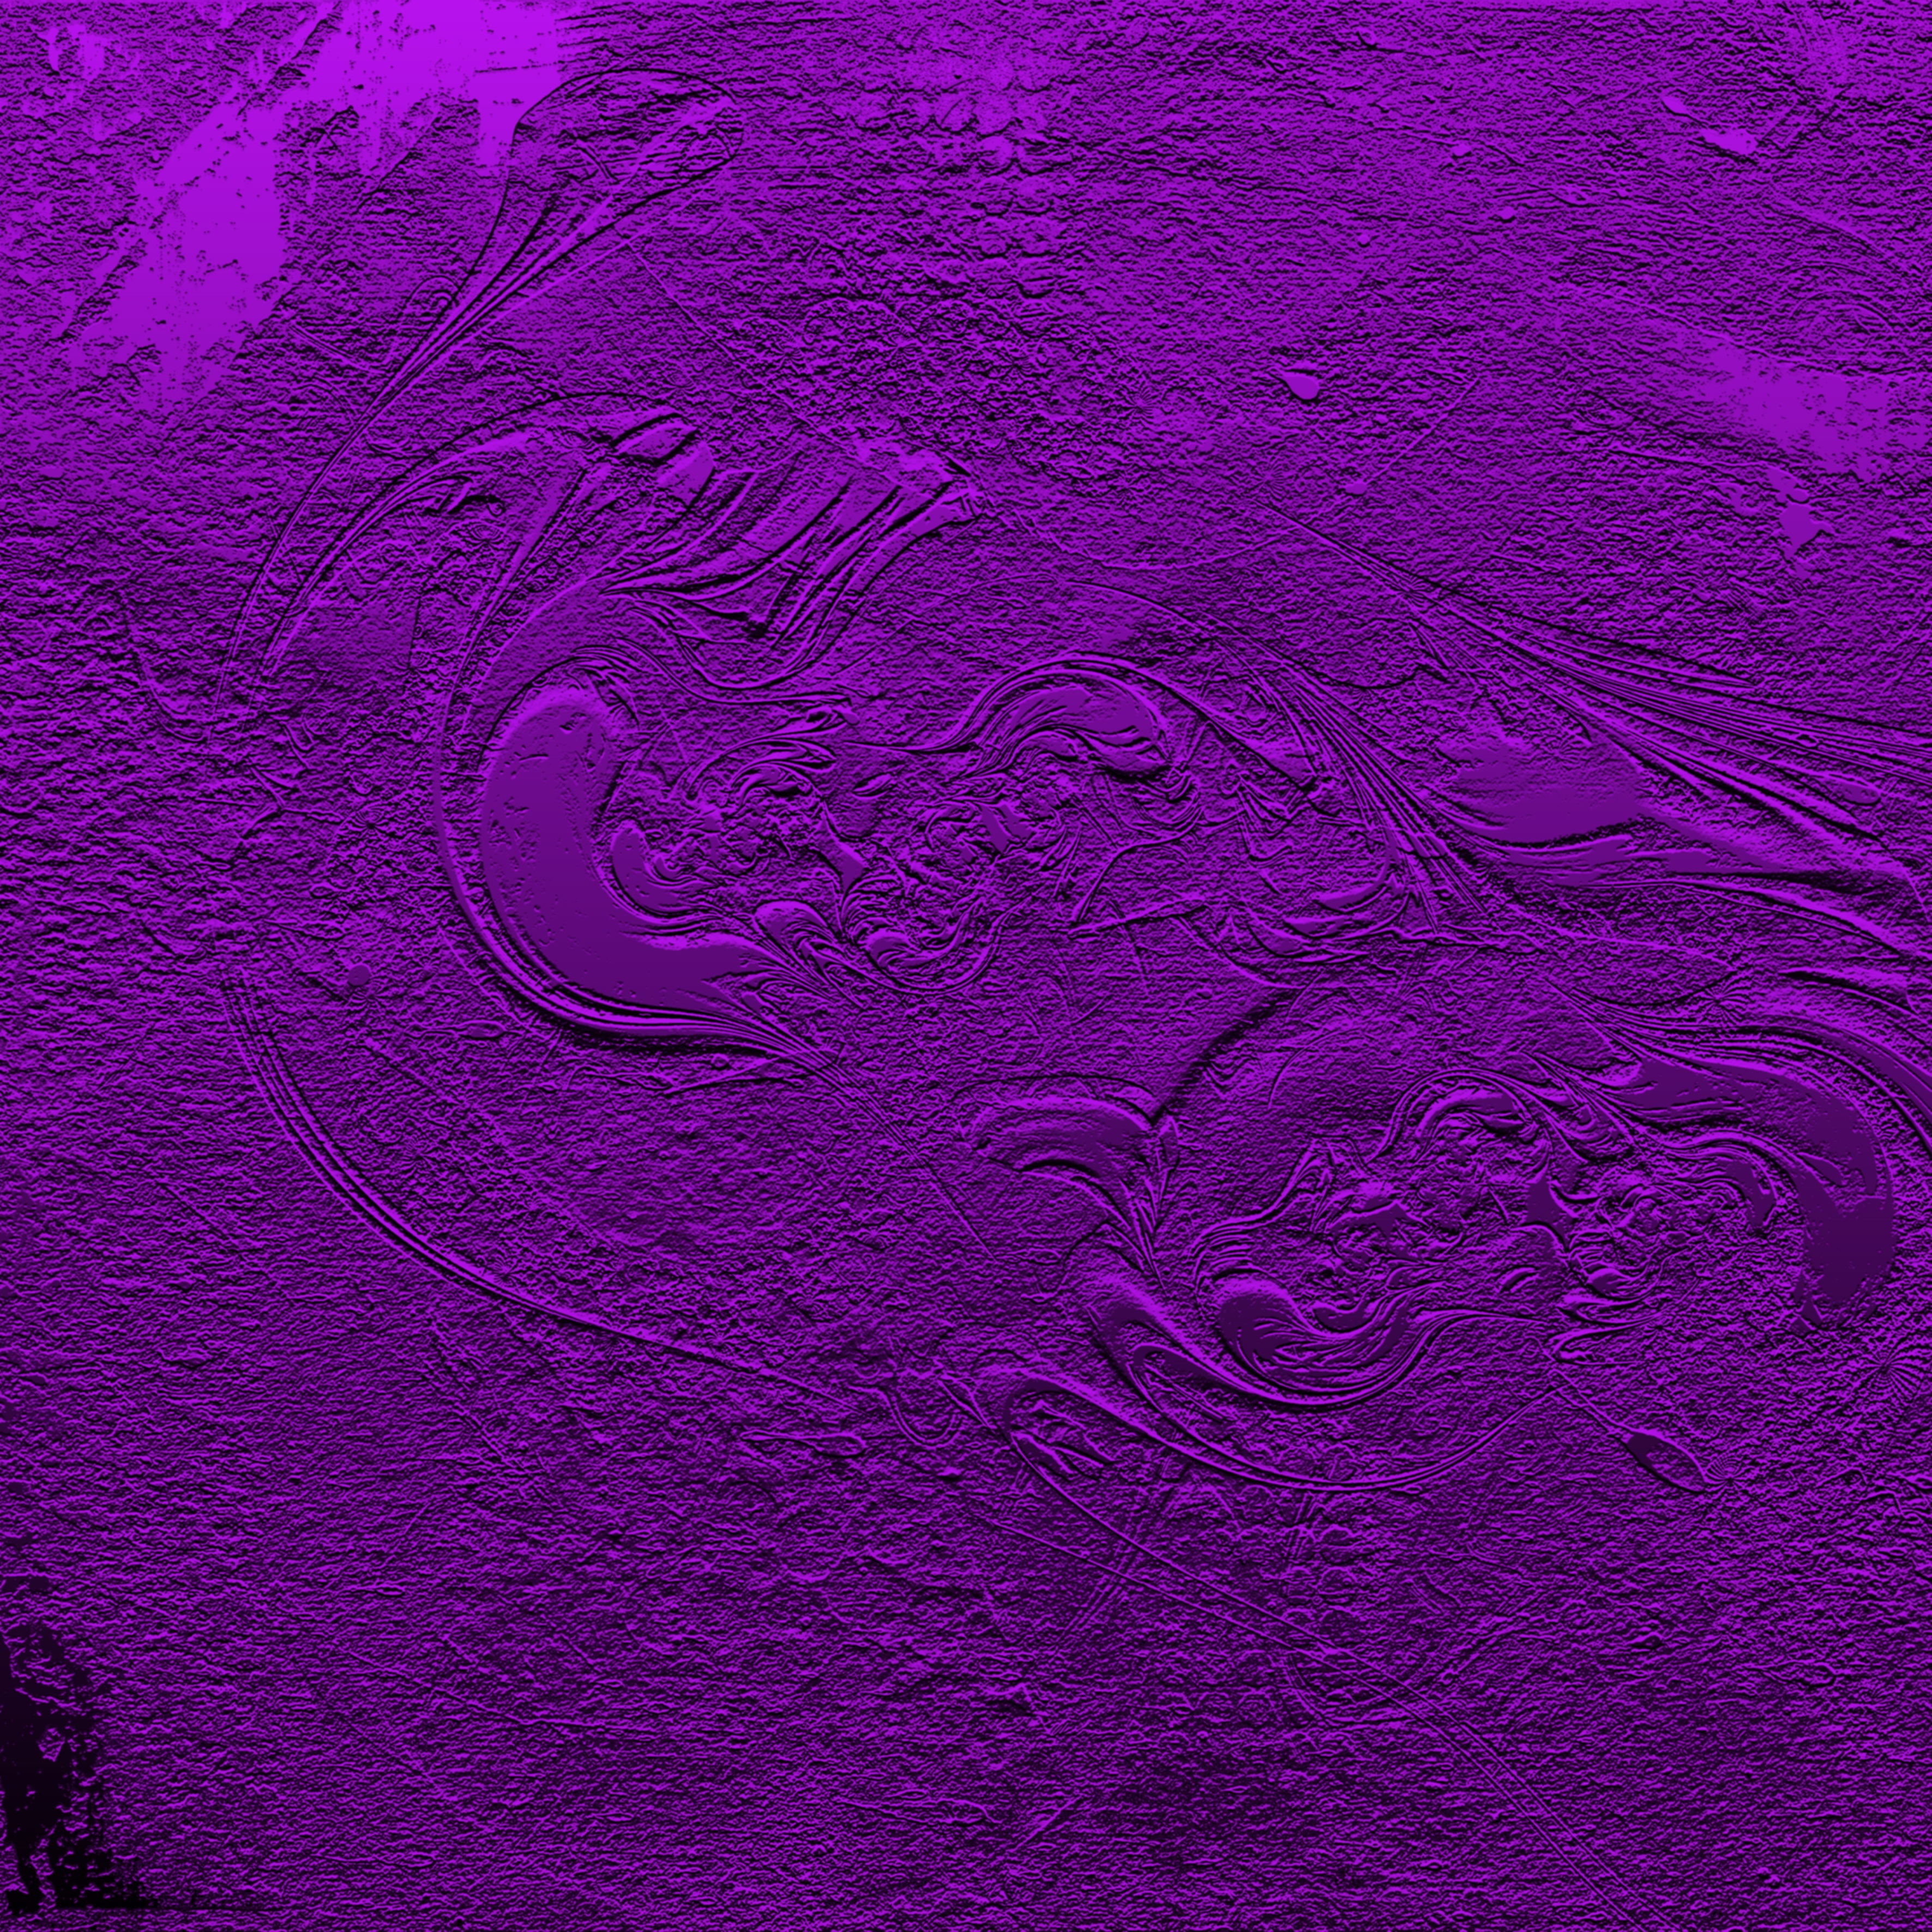 textures, violet, patterns, texture, irregularities, purple